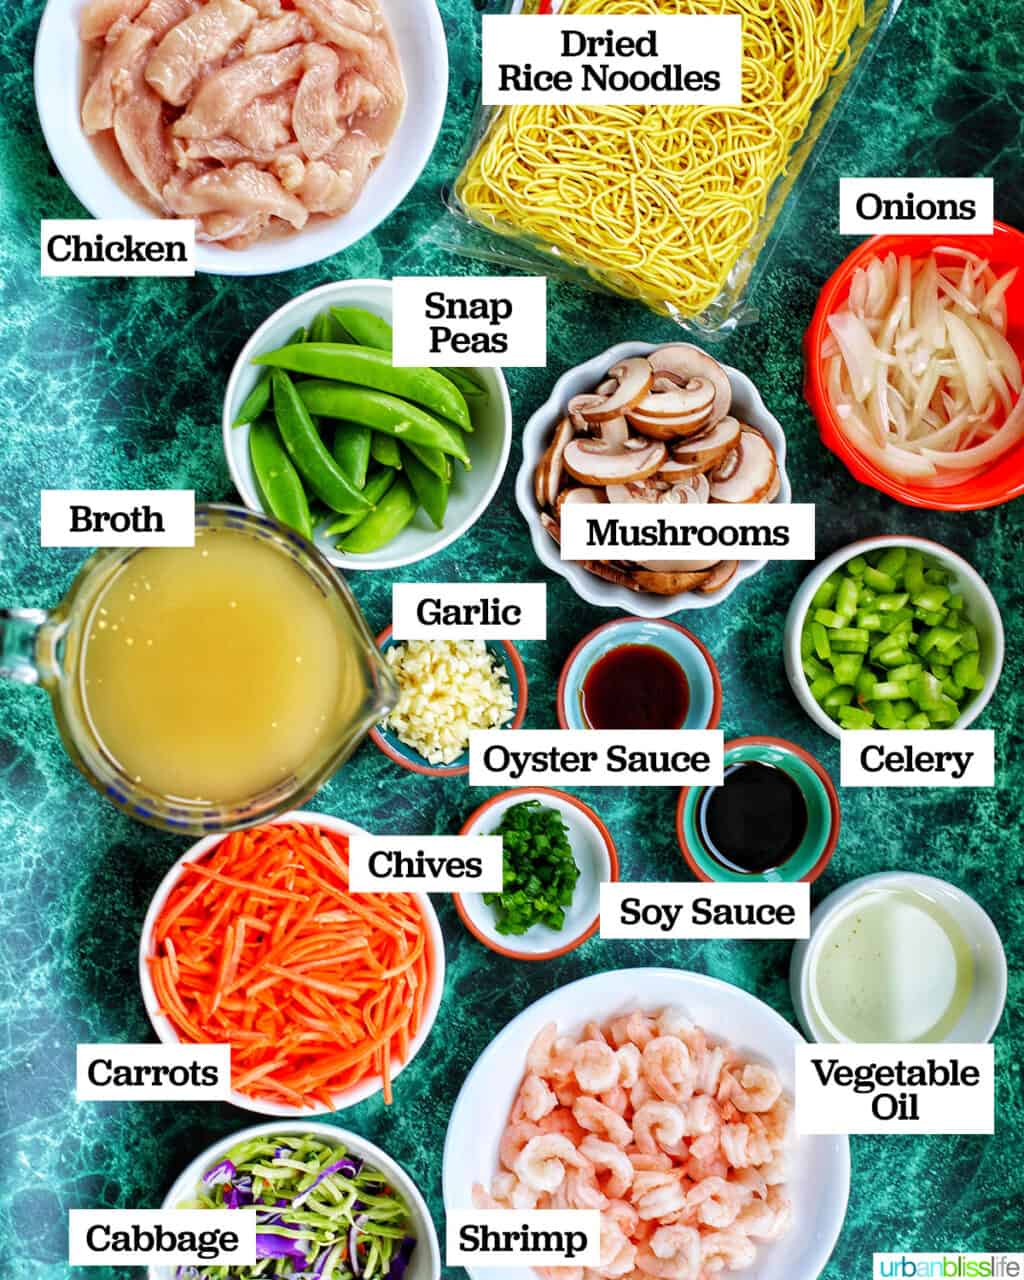 ingredients for adding shrimp to Filipino pancit canton noodles